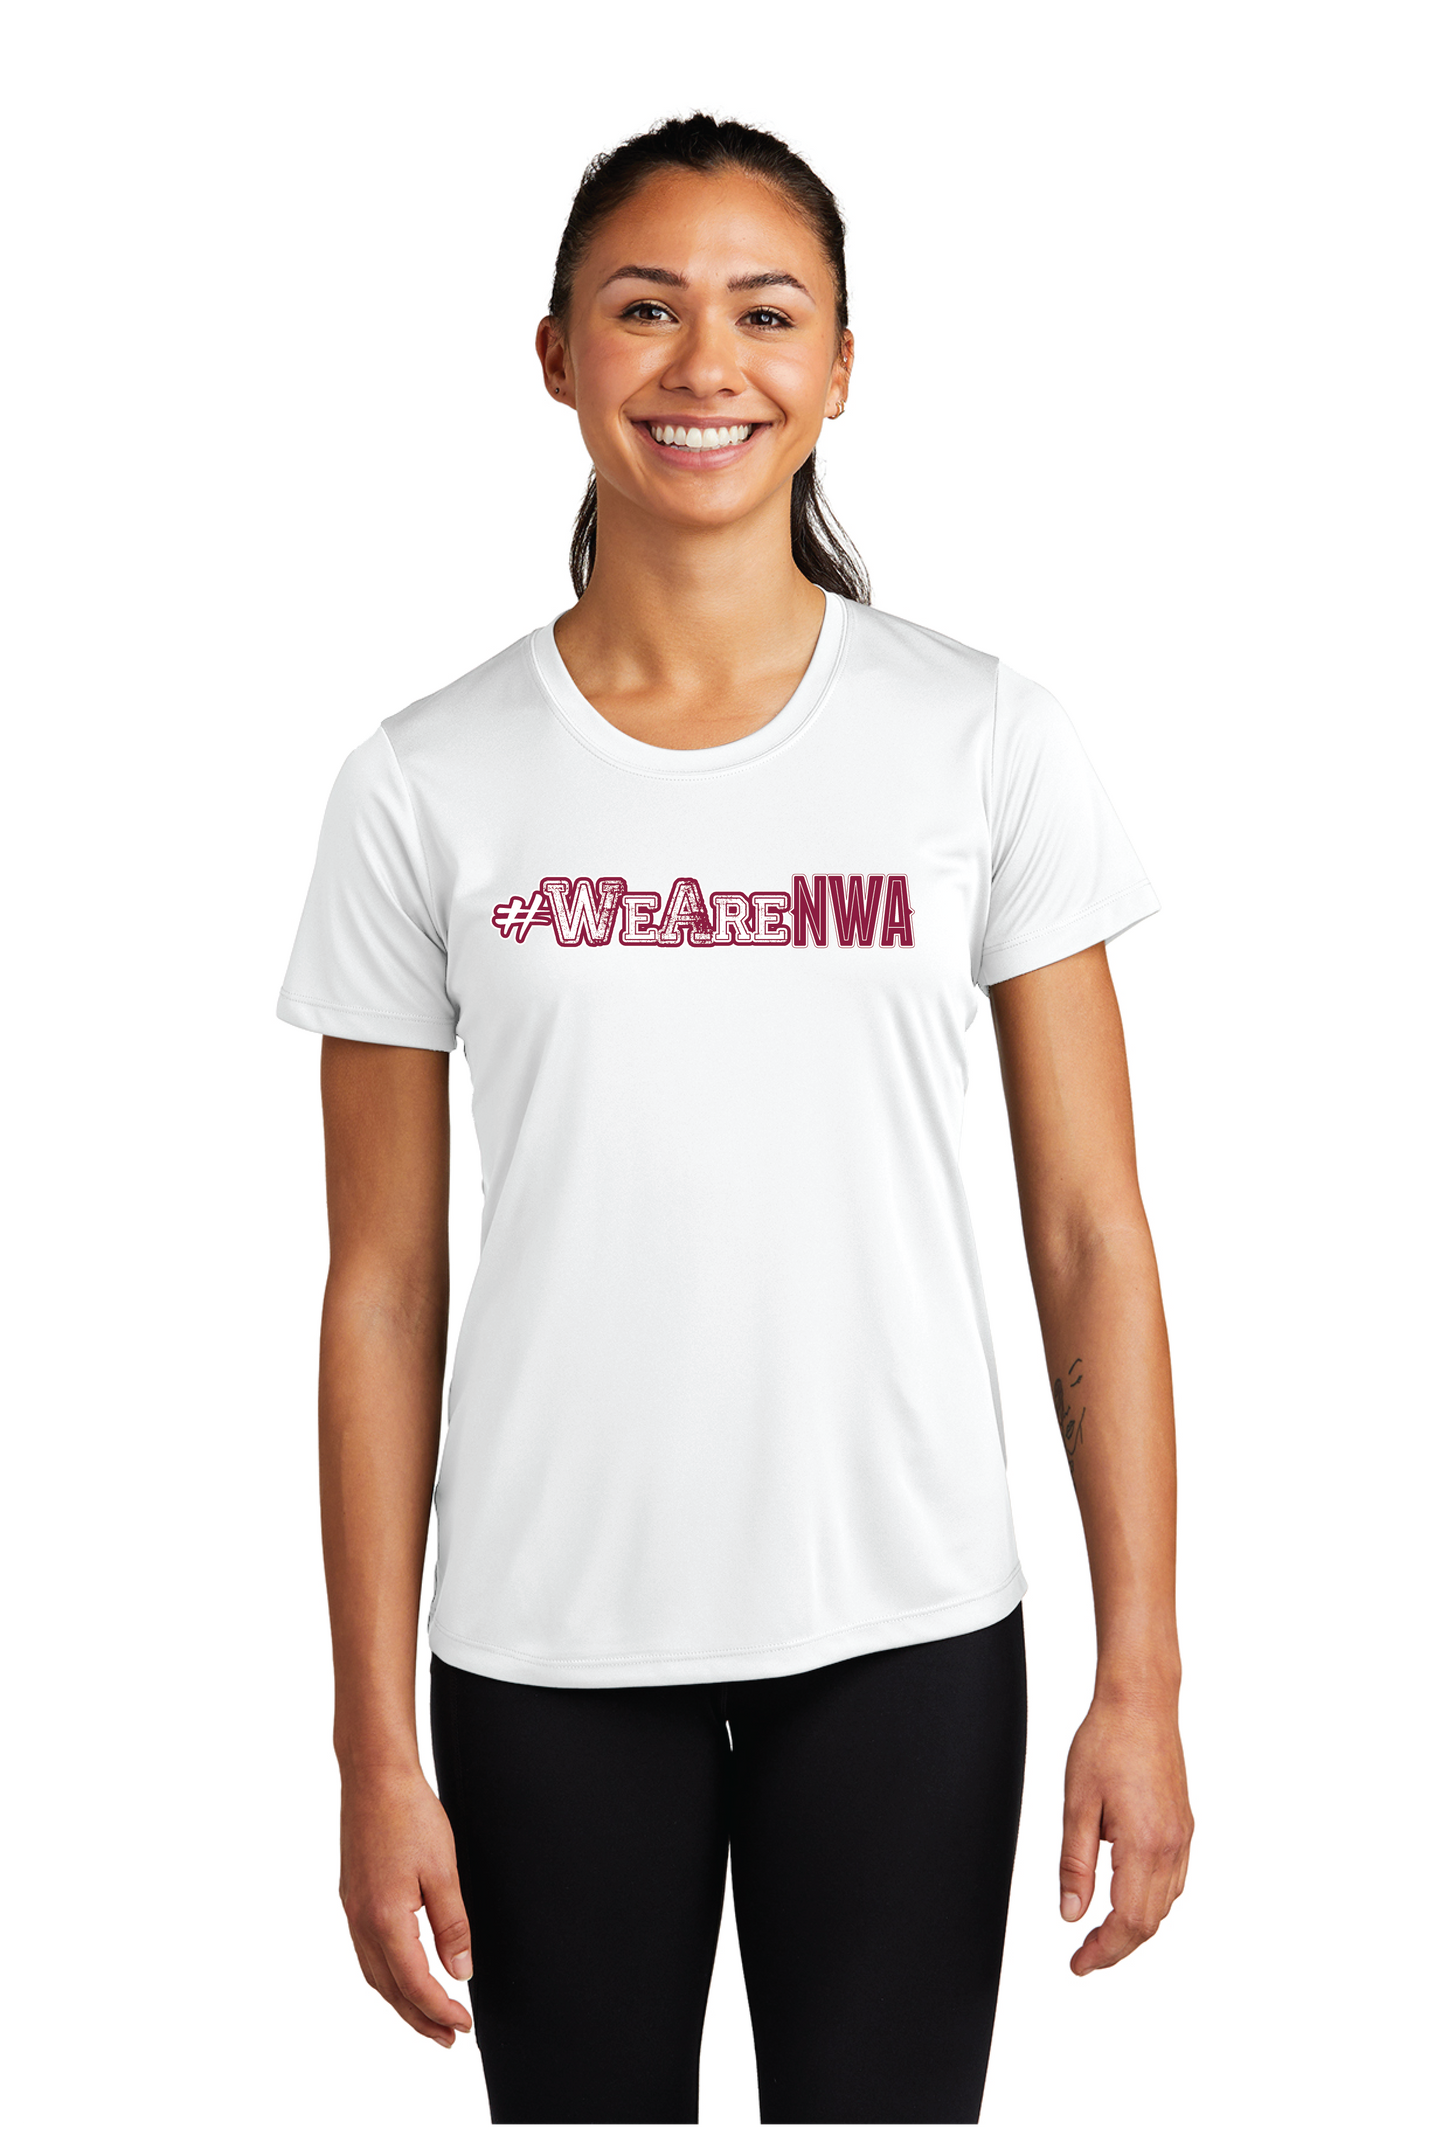 COTTON - NWA T-Shirt - Any design